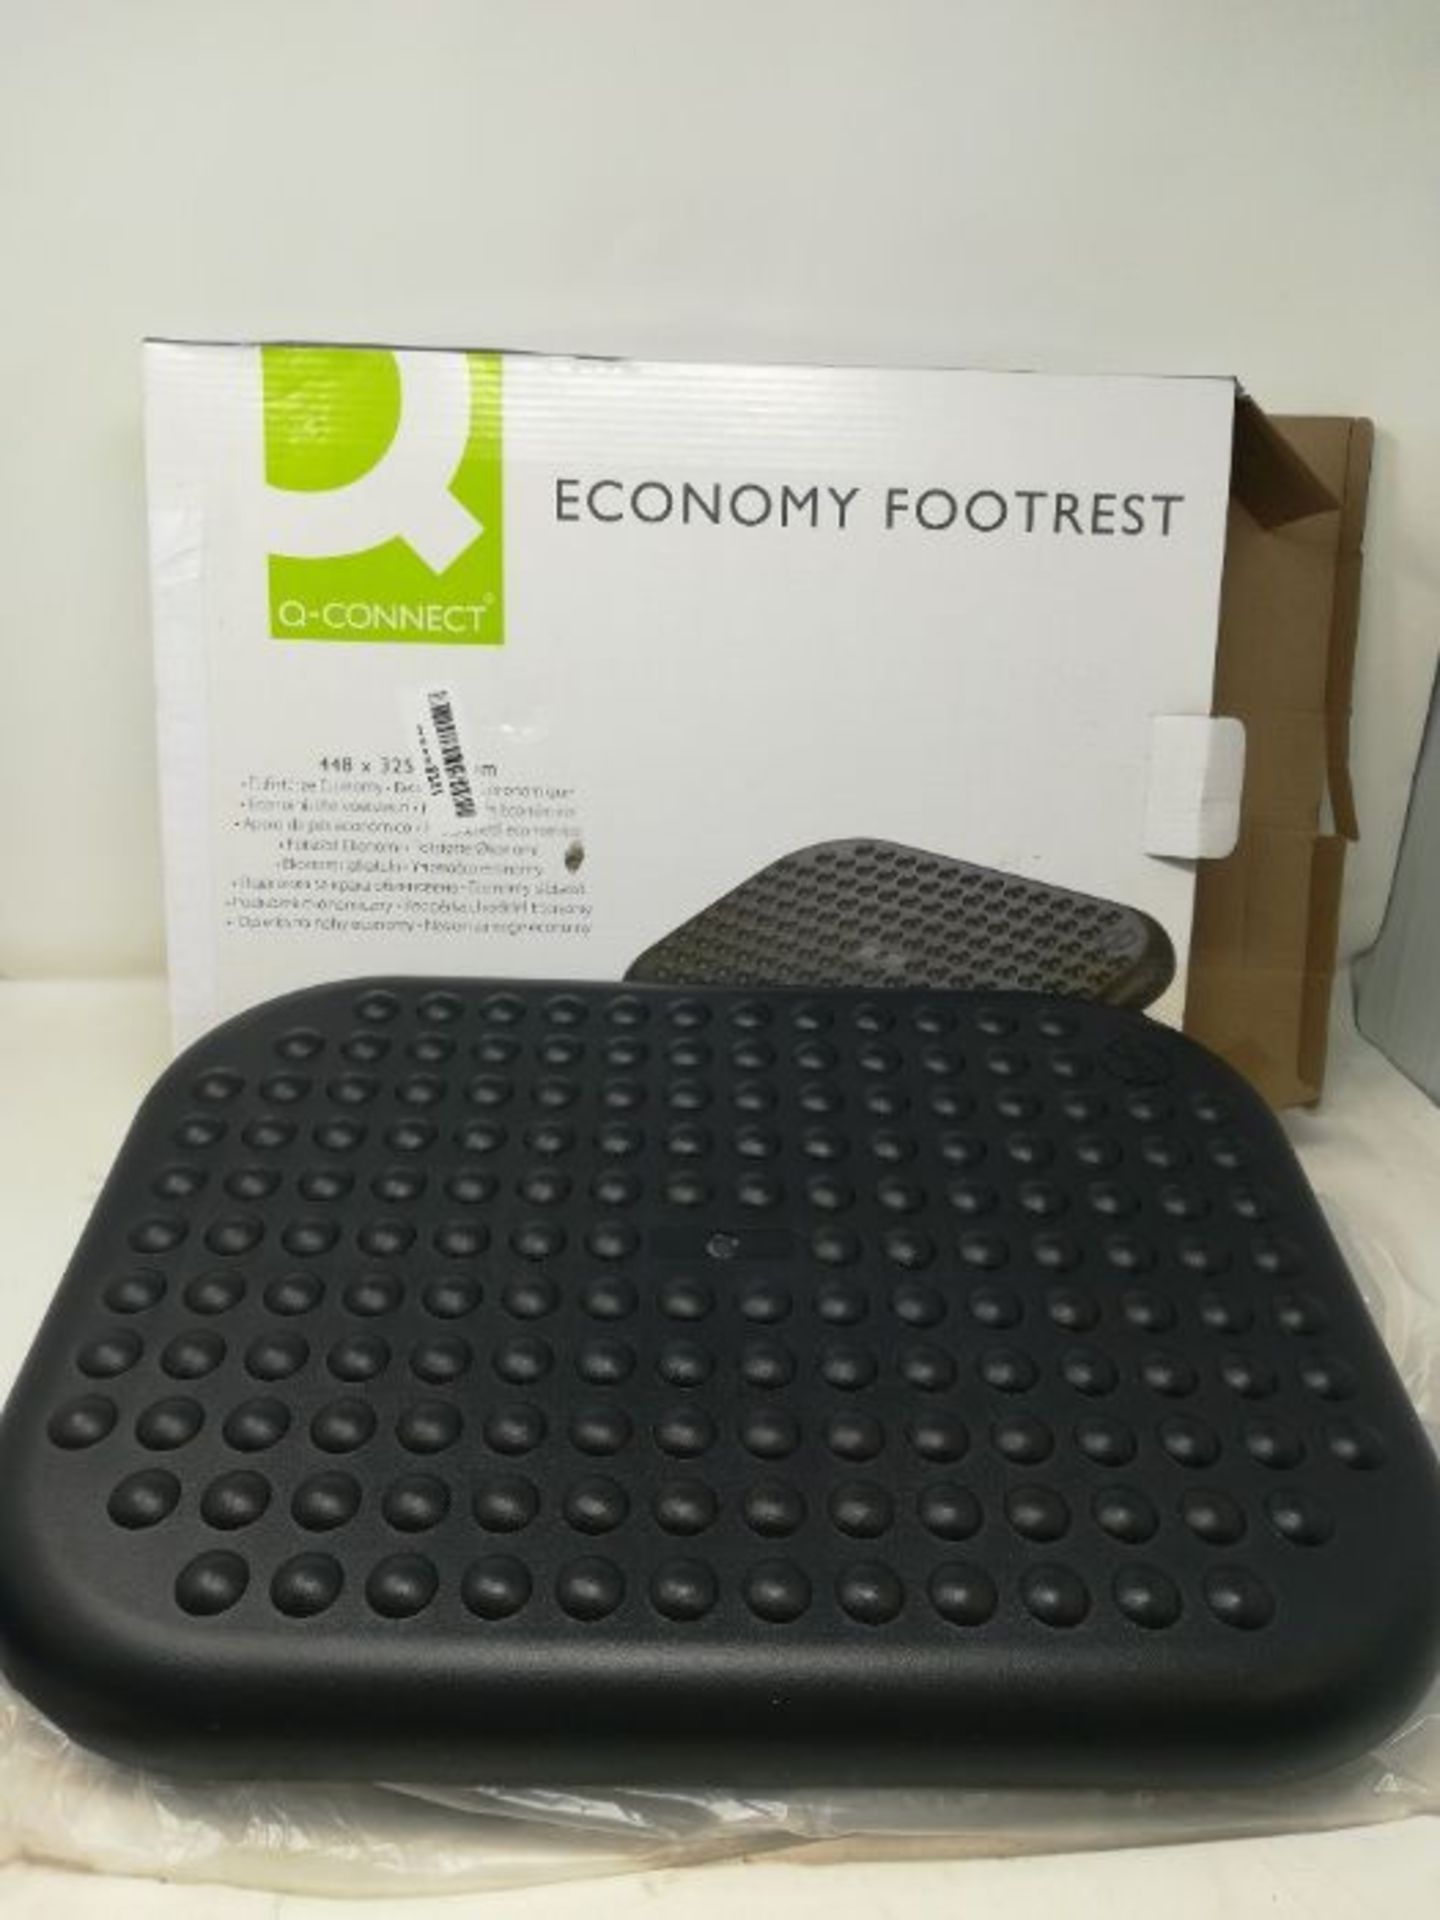 Q-Connect KF17981 Economy Footrest - Black - Image 2 of 2